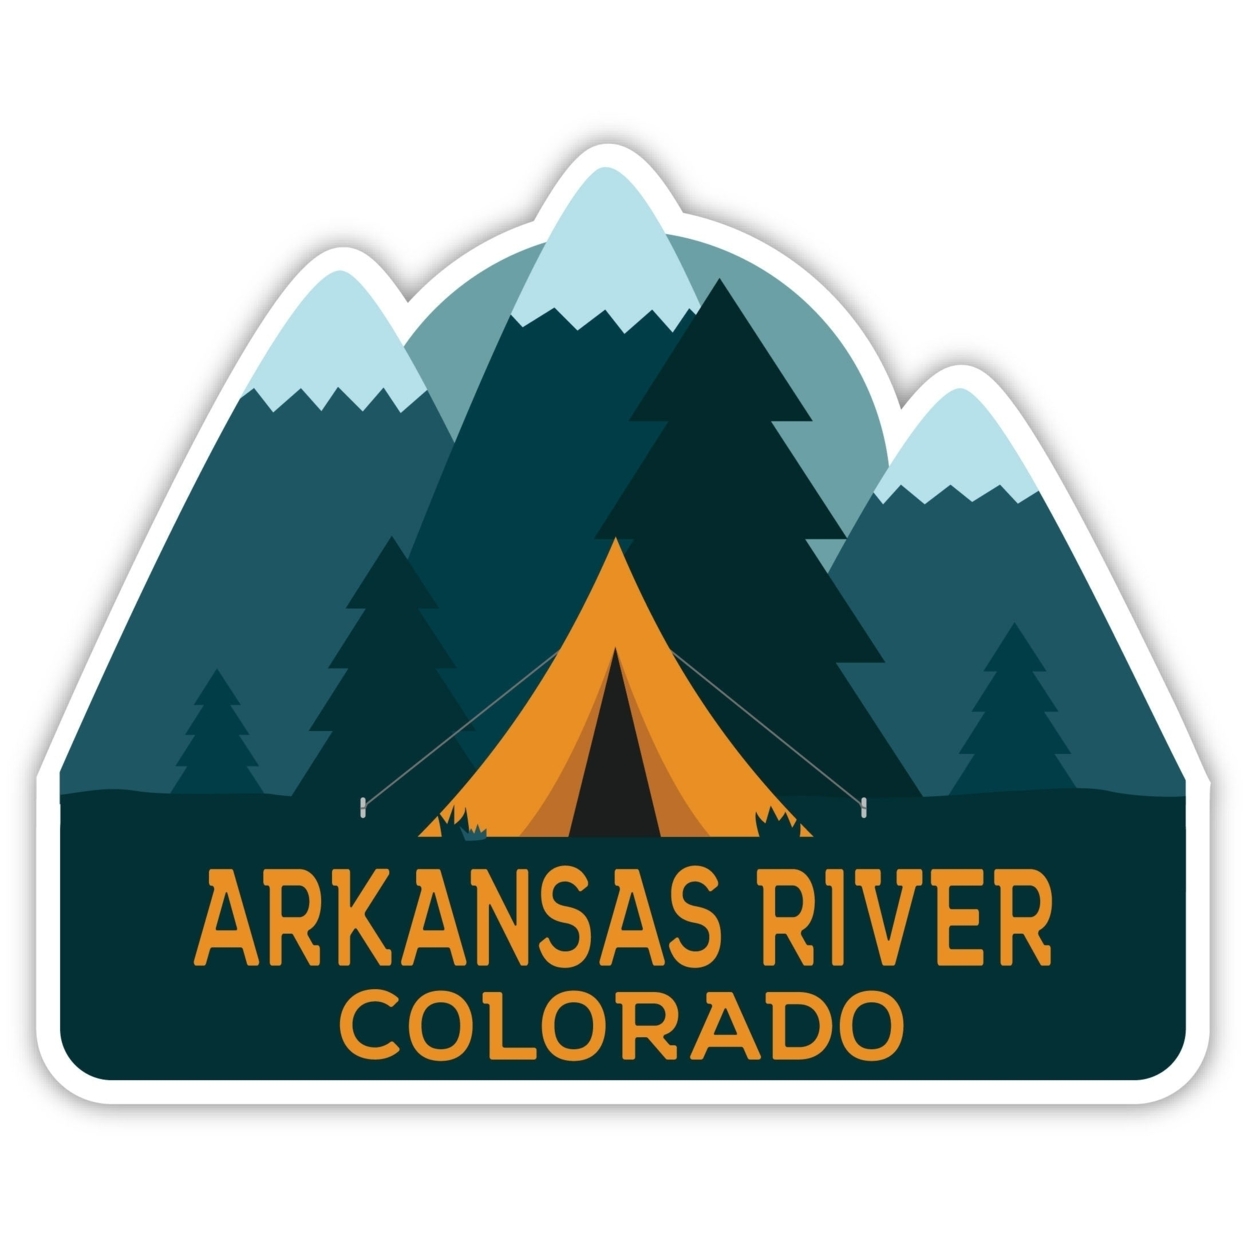 Arkansas River Colorado Souvenir Decorative Stickers (Choose Theme And Size) - 4-Pack, 12-Inch, Tent